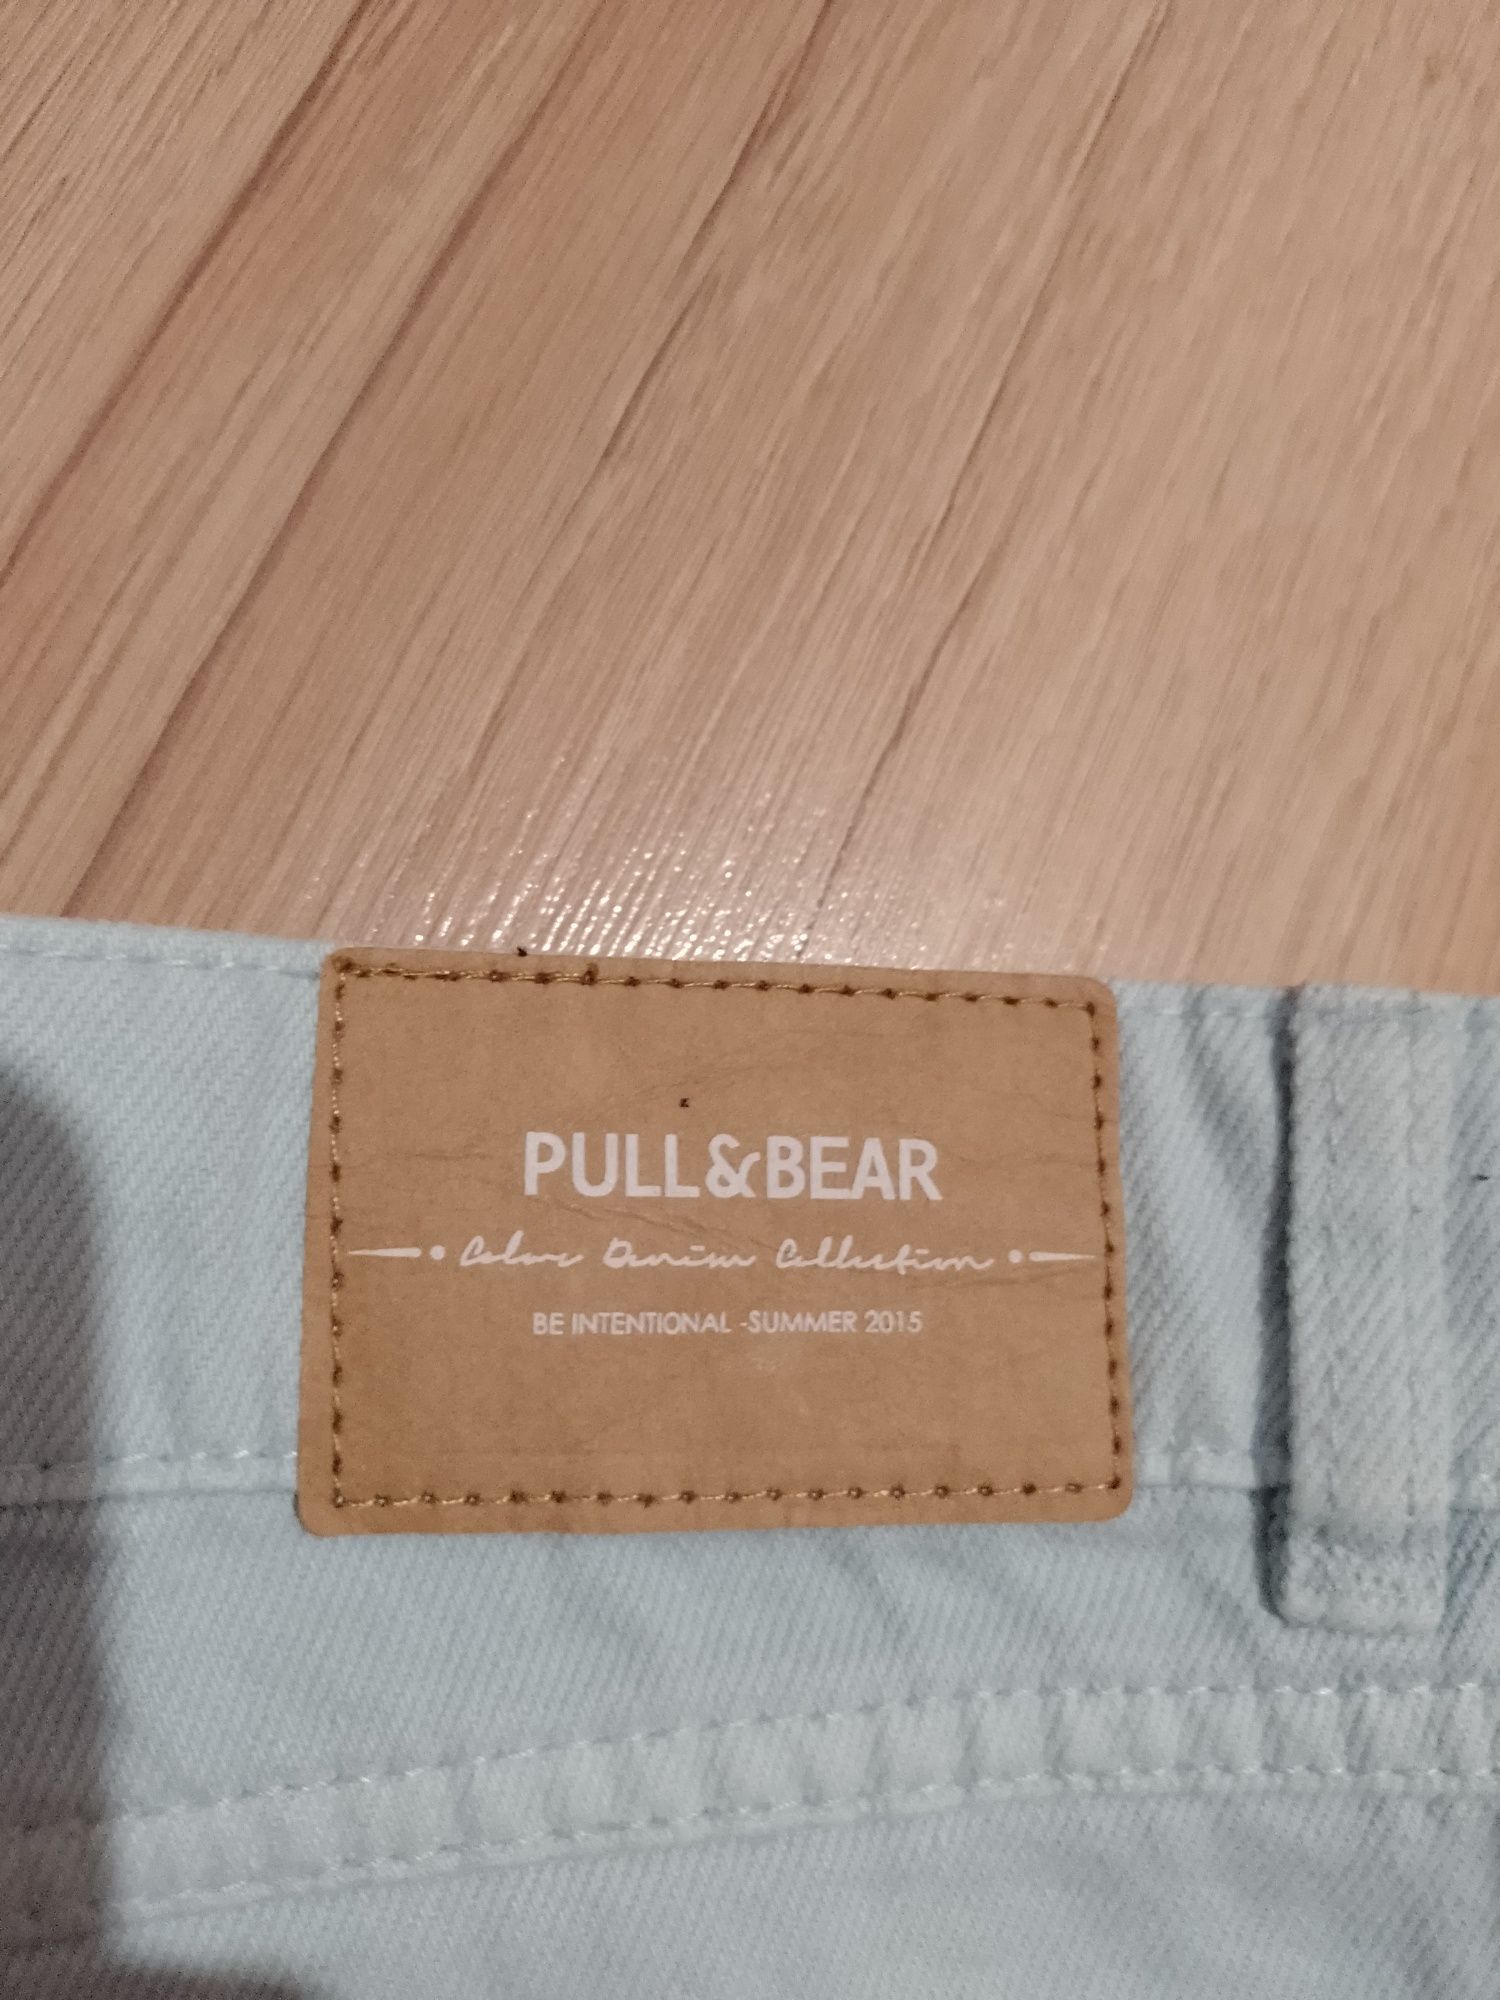 Spodenki jeansowe Pull&Bear damskie r.36